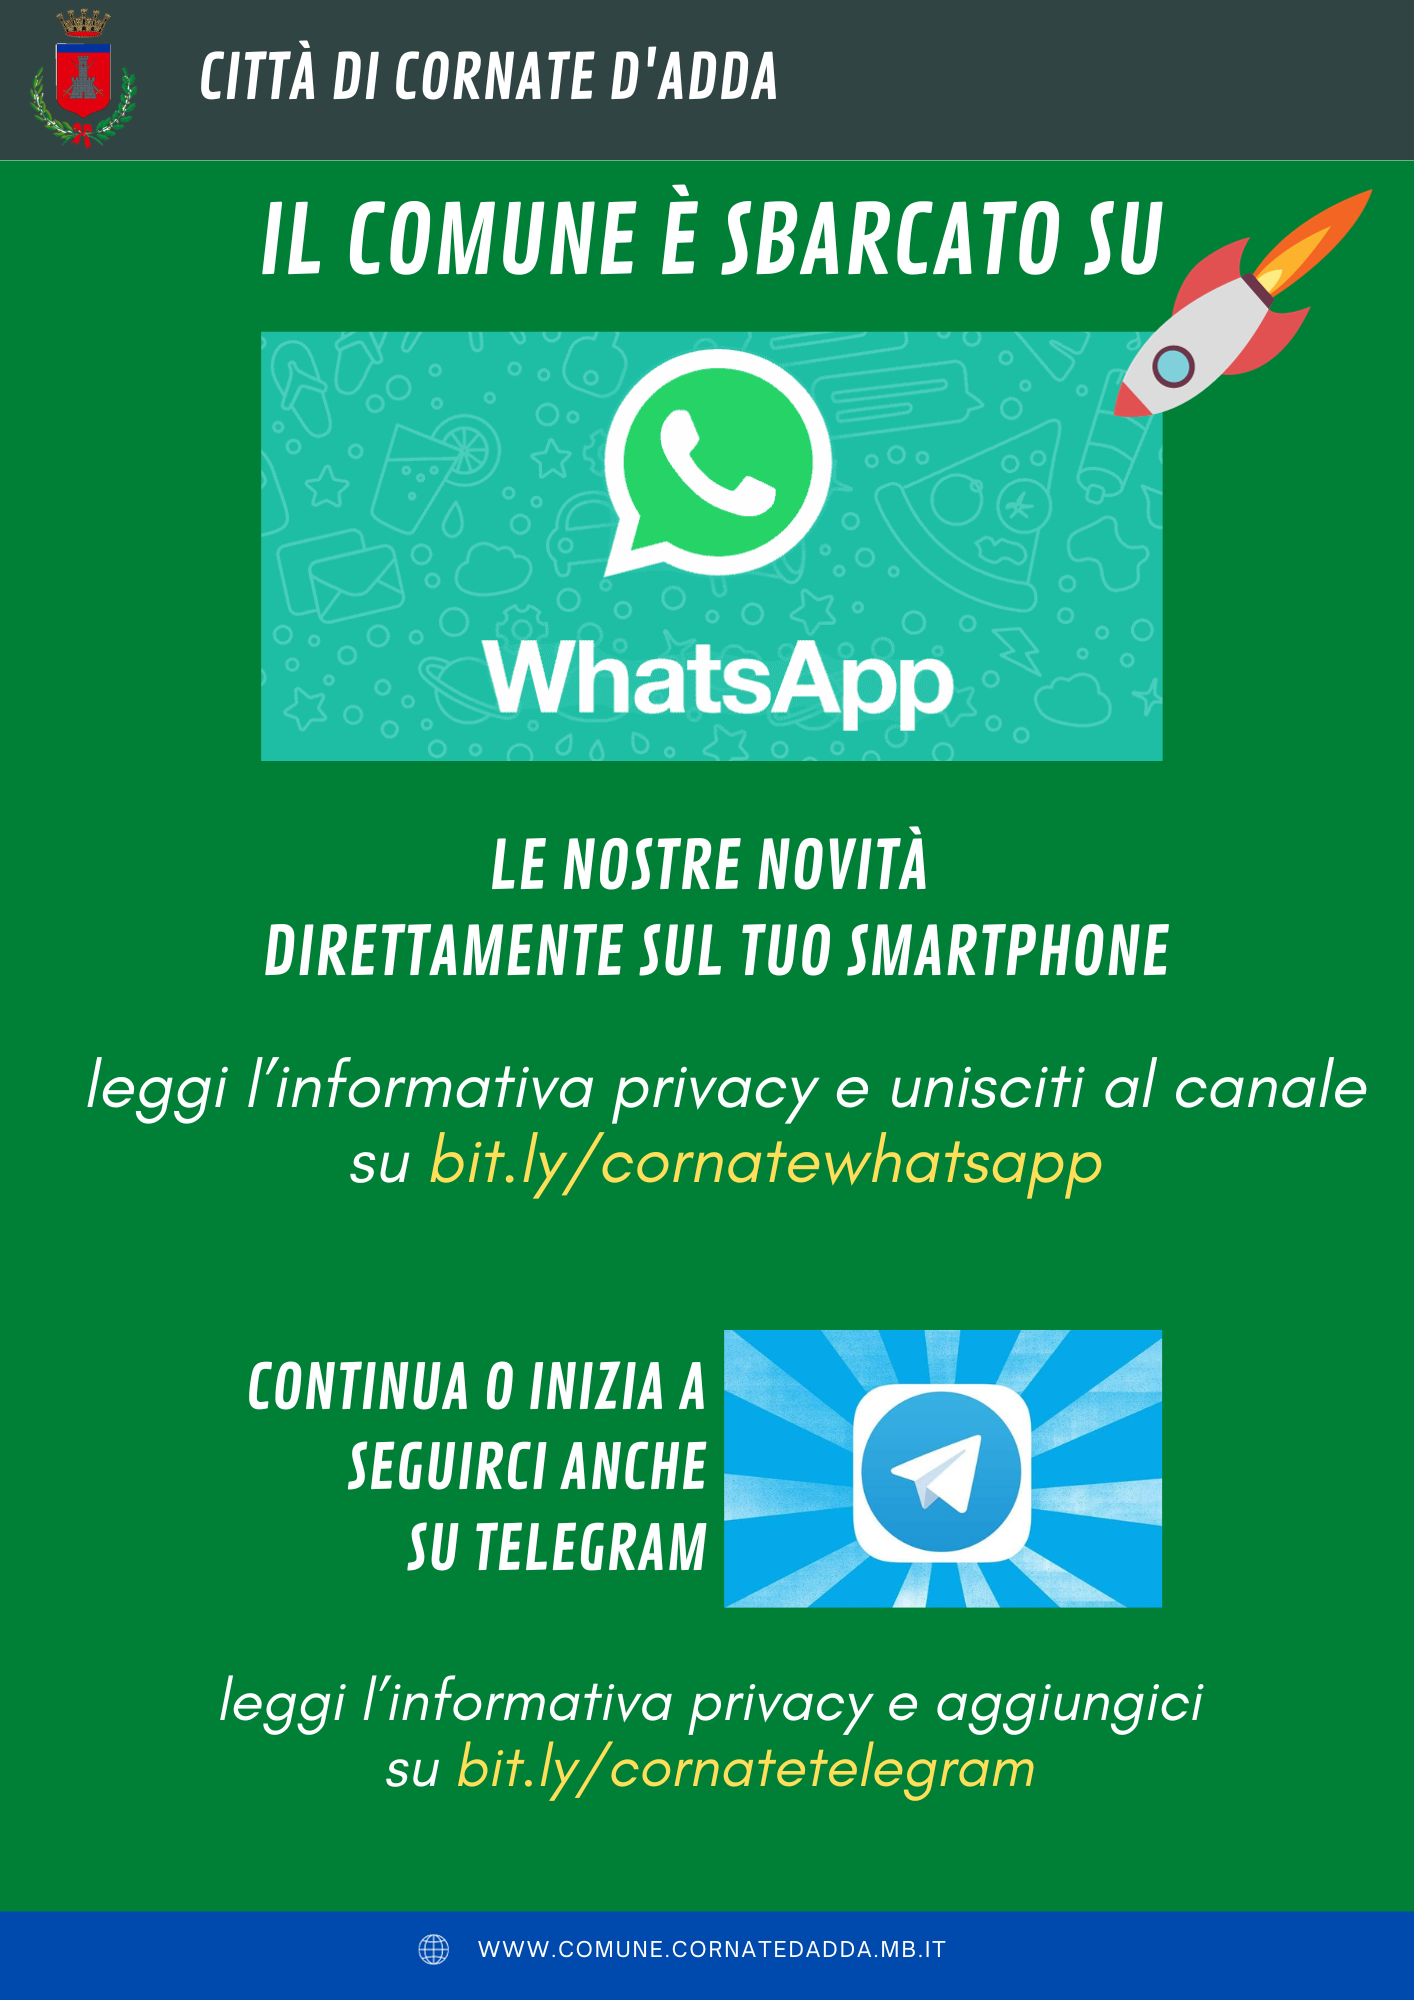  Canali whatsapp e telegram